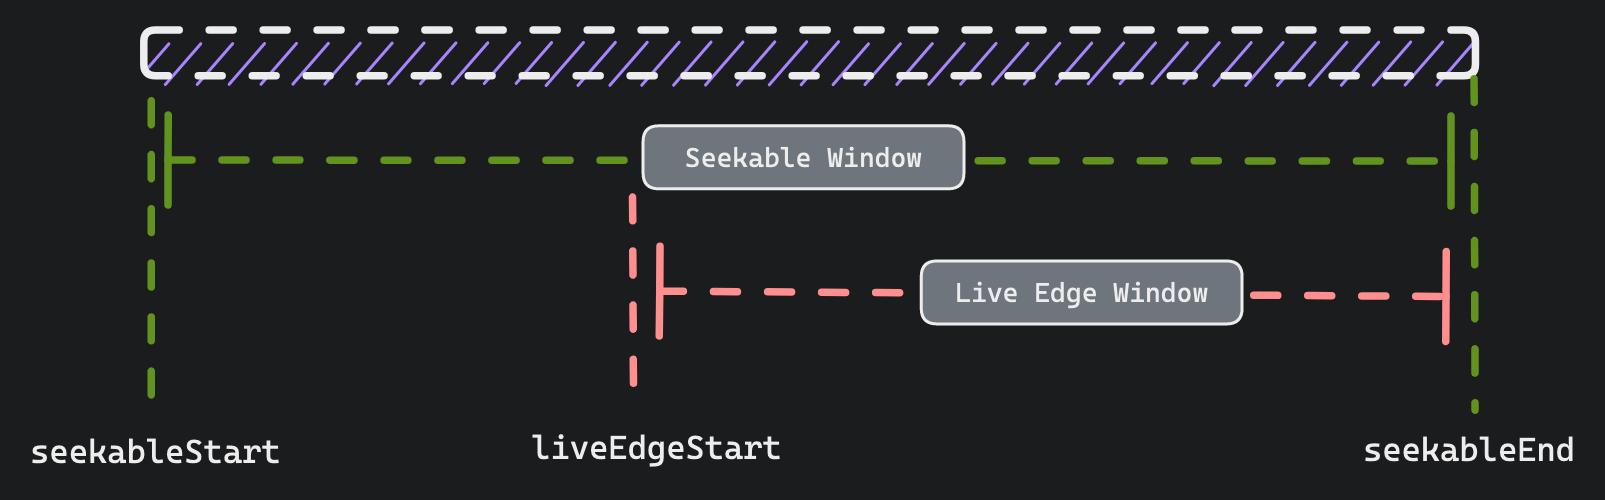 Seekable window and live edge window inside of it